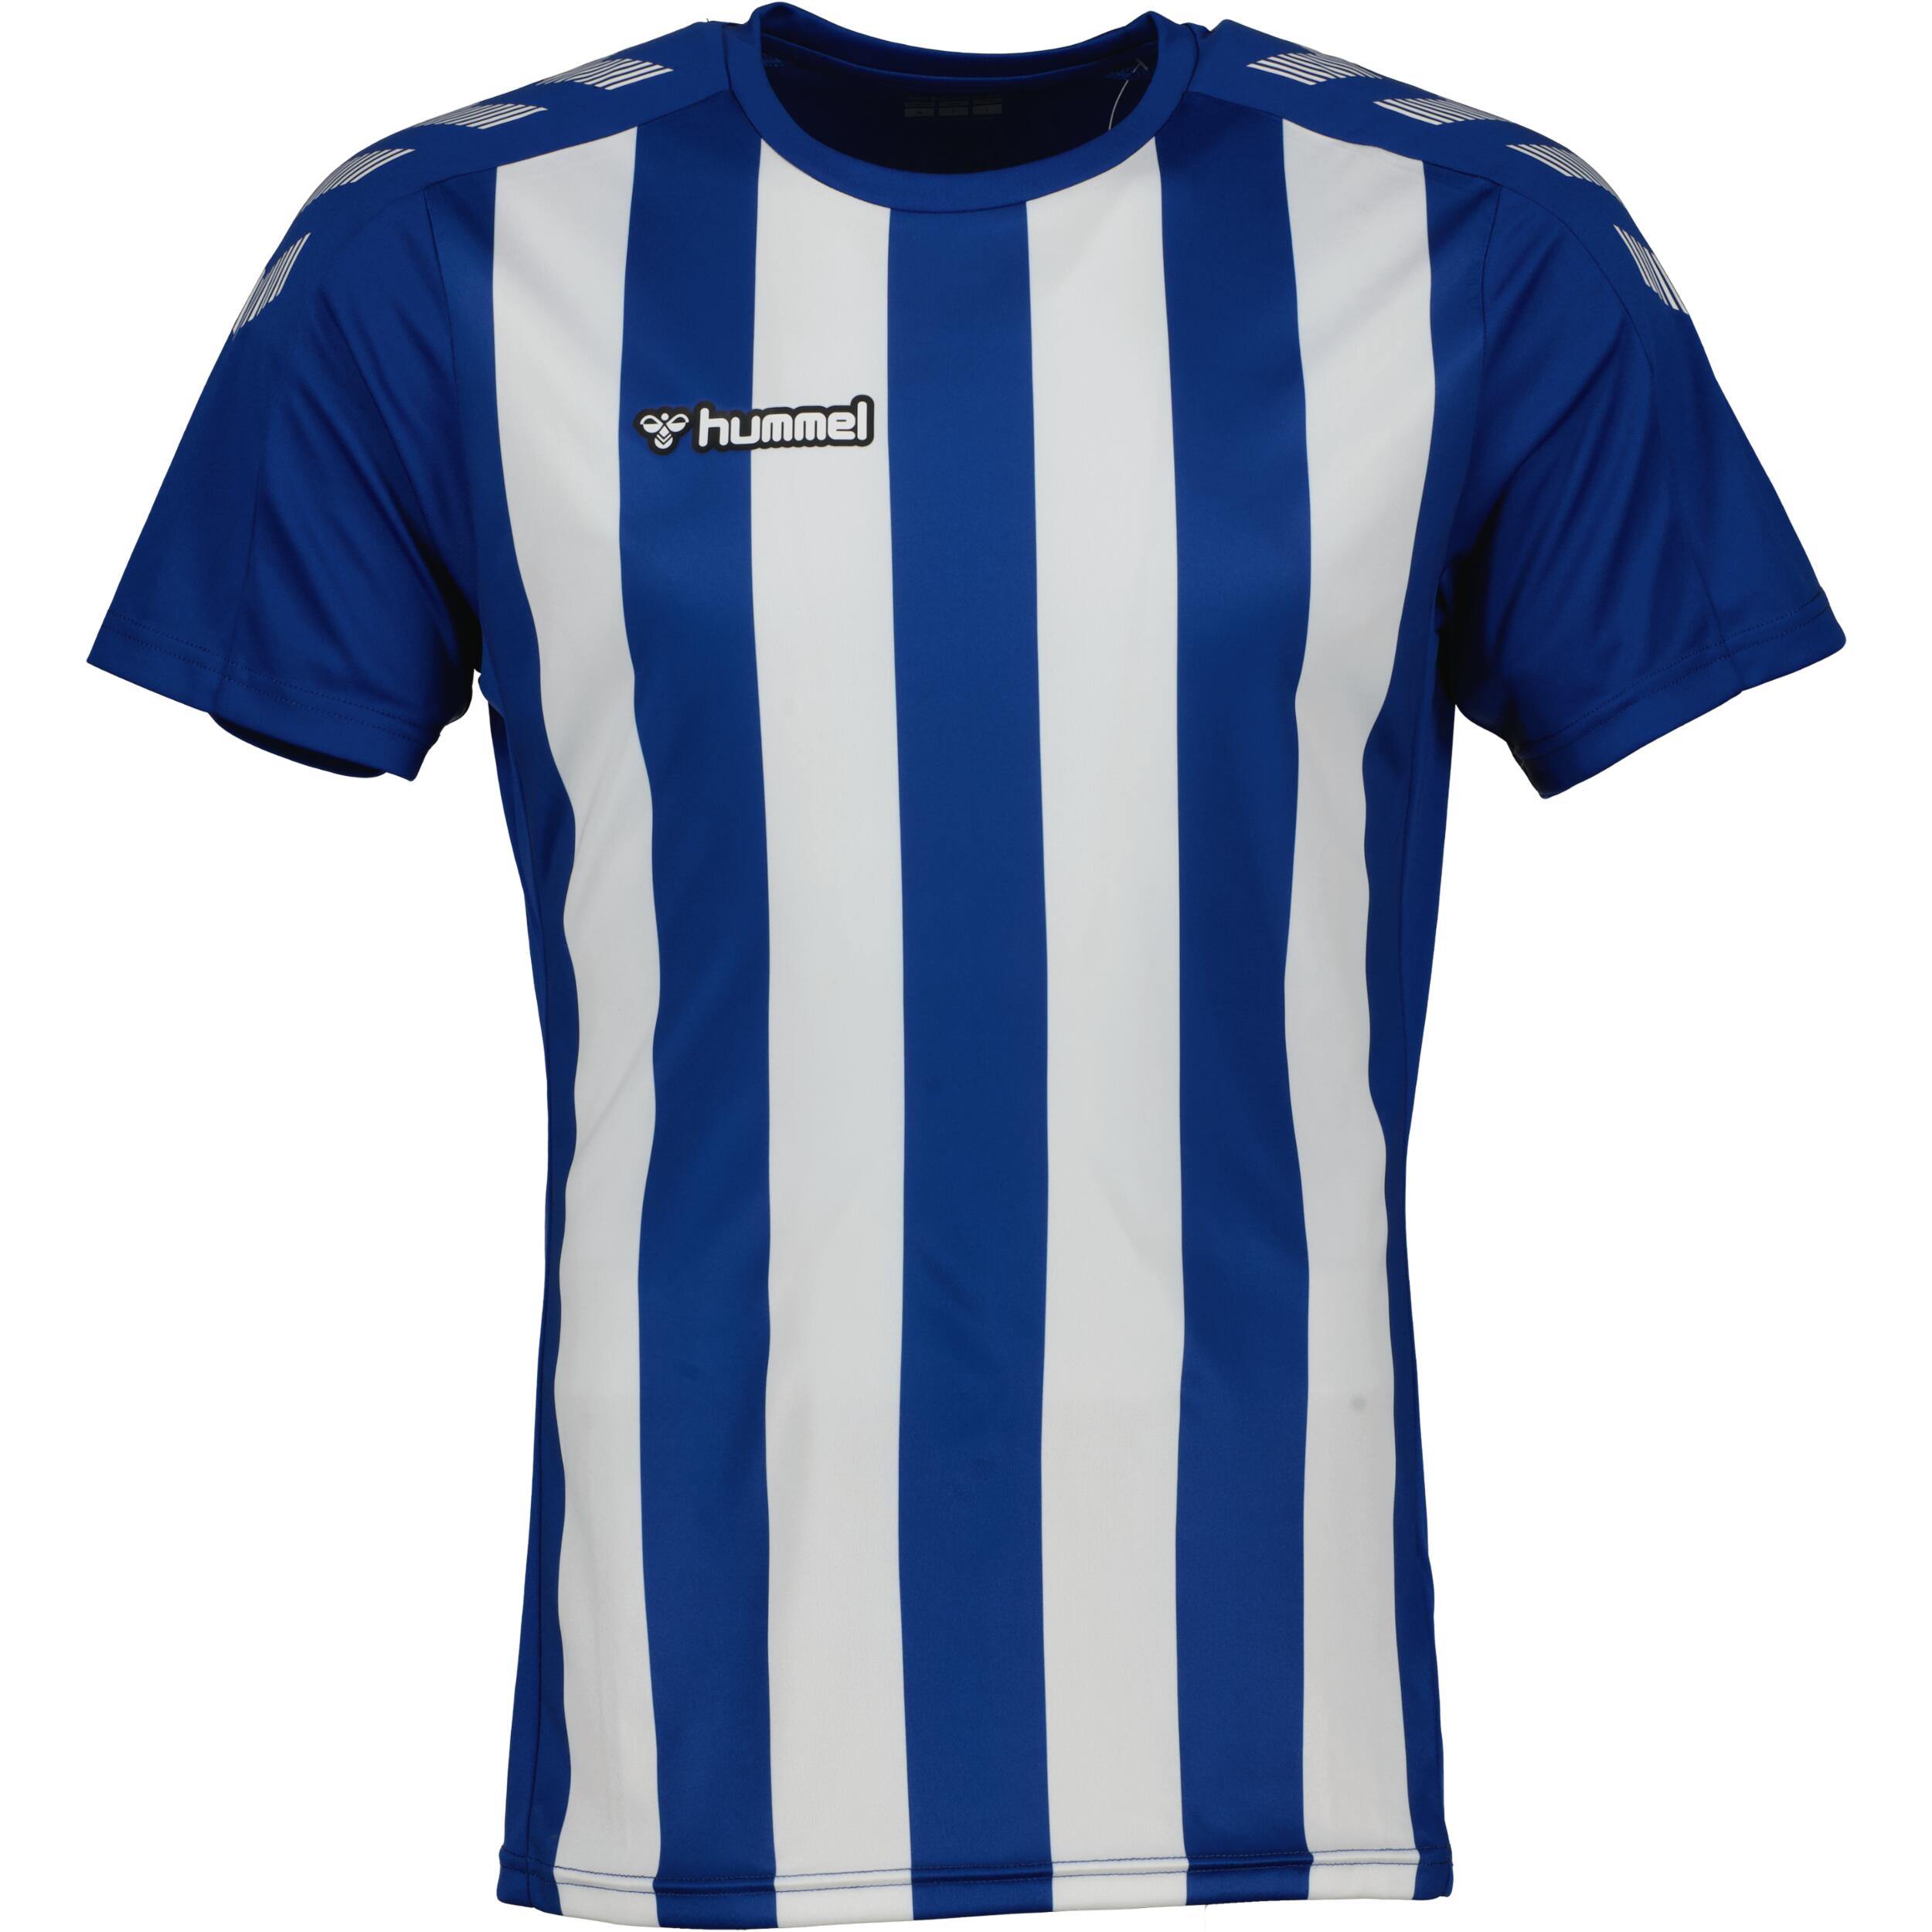 Stripe jersey for kids, great for football, in true blue/white 1/3